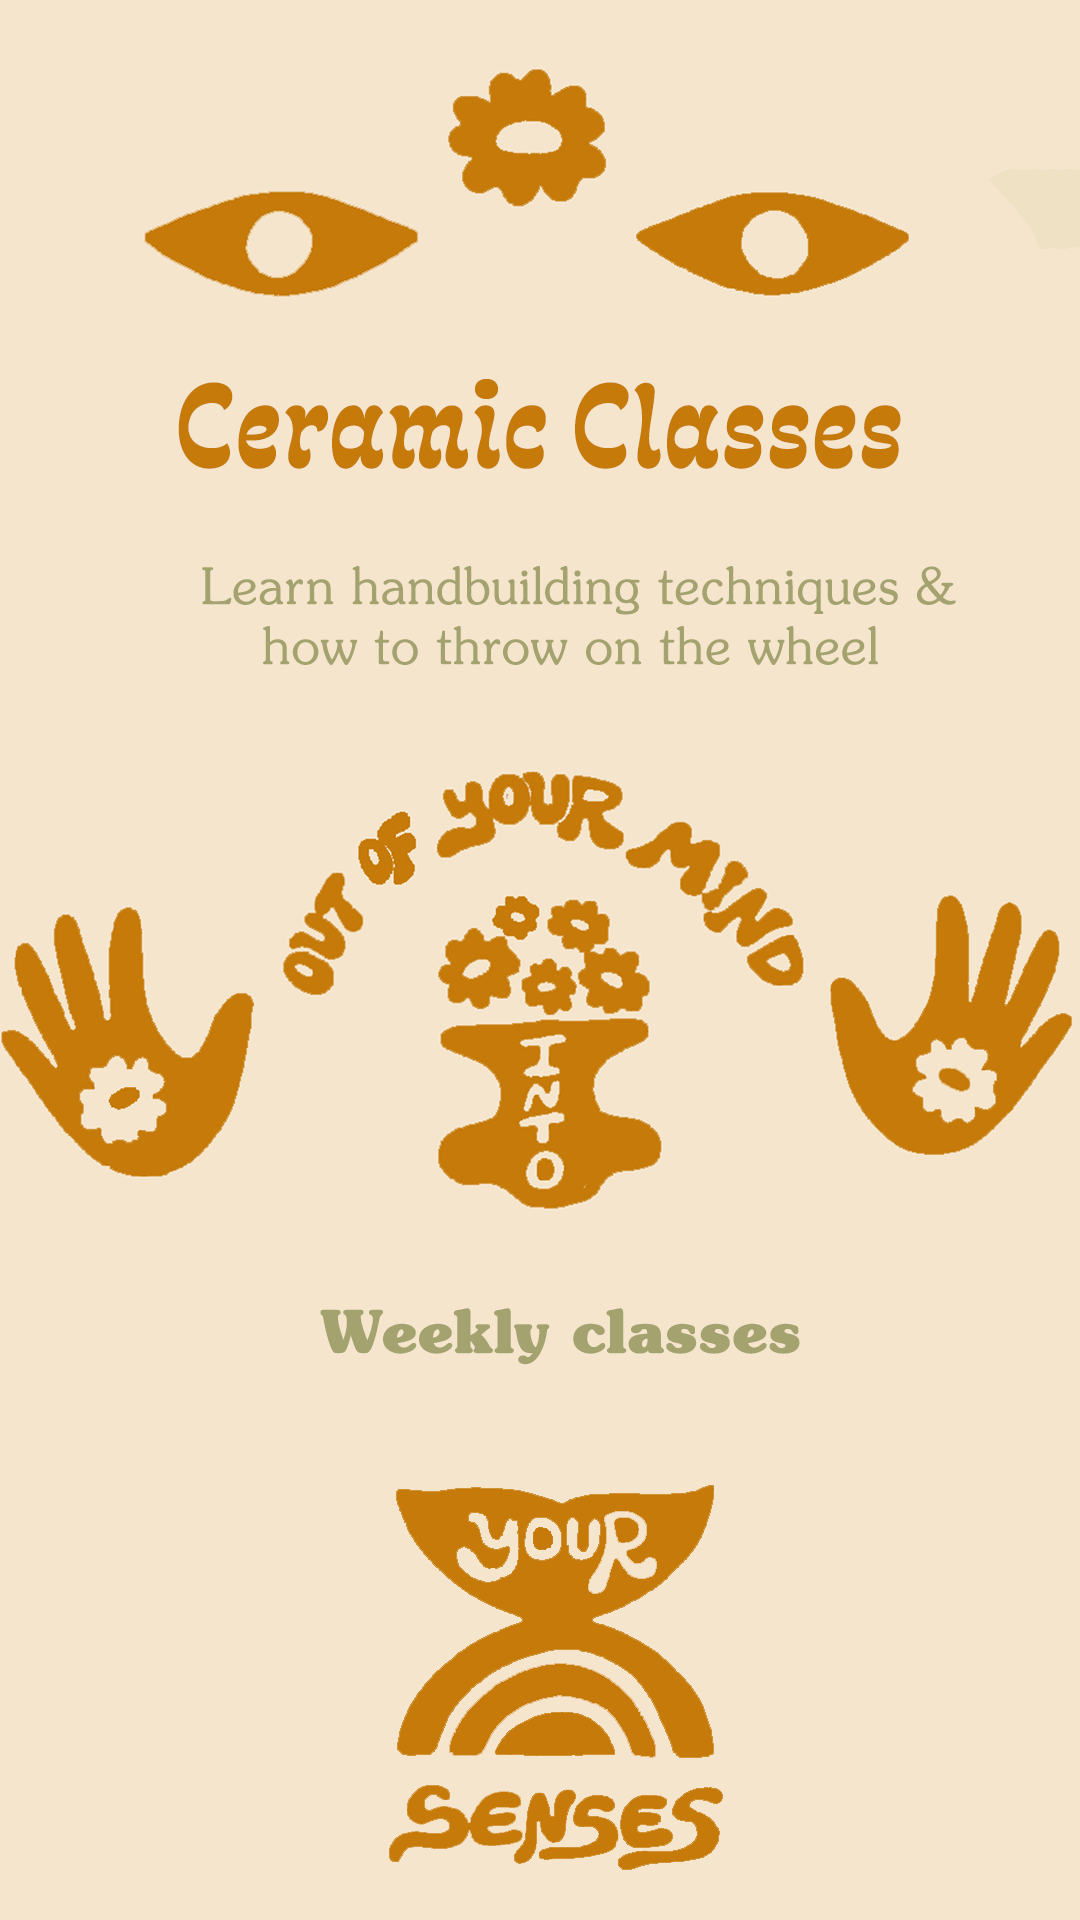 Weekly Ceramic Classes